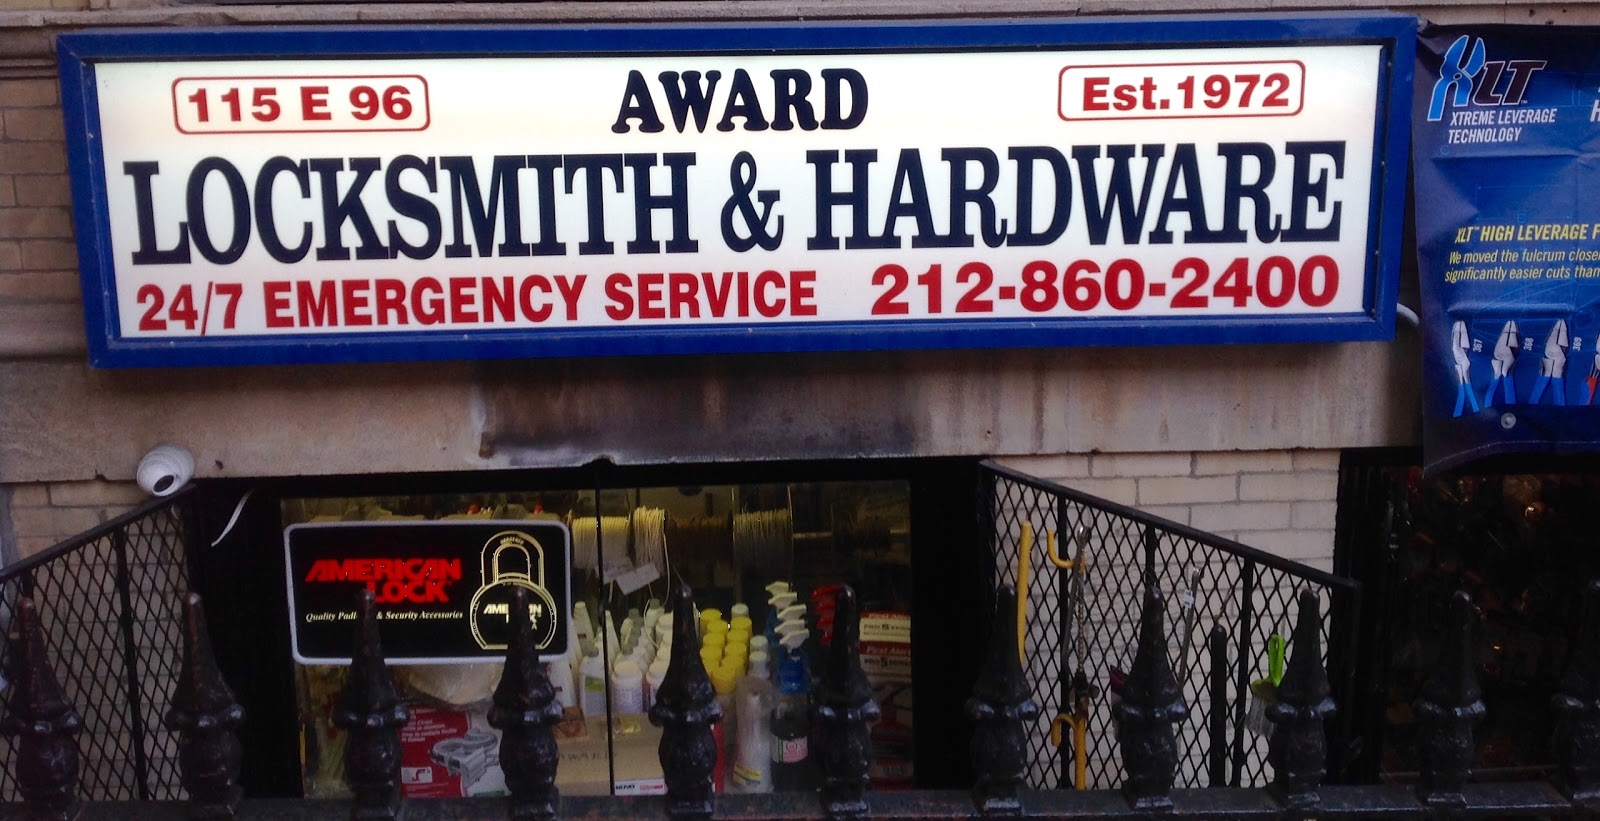 Photo of Award Locksmith &hardware in New York City, New York, United States - 7 Picture of Point of interest, Establishment, Store, Hardware store, Locksmith